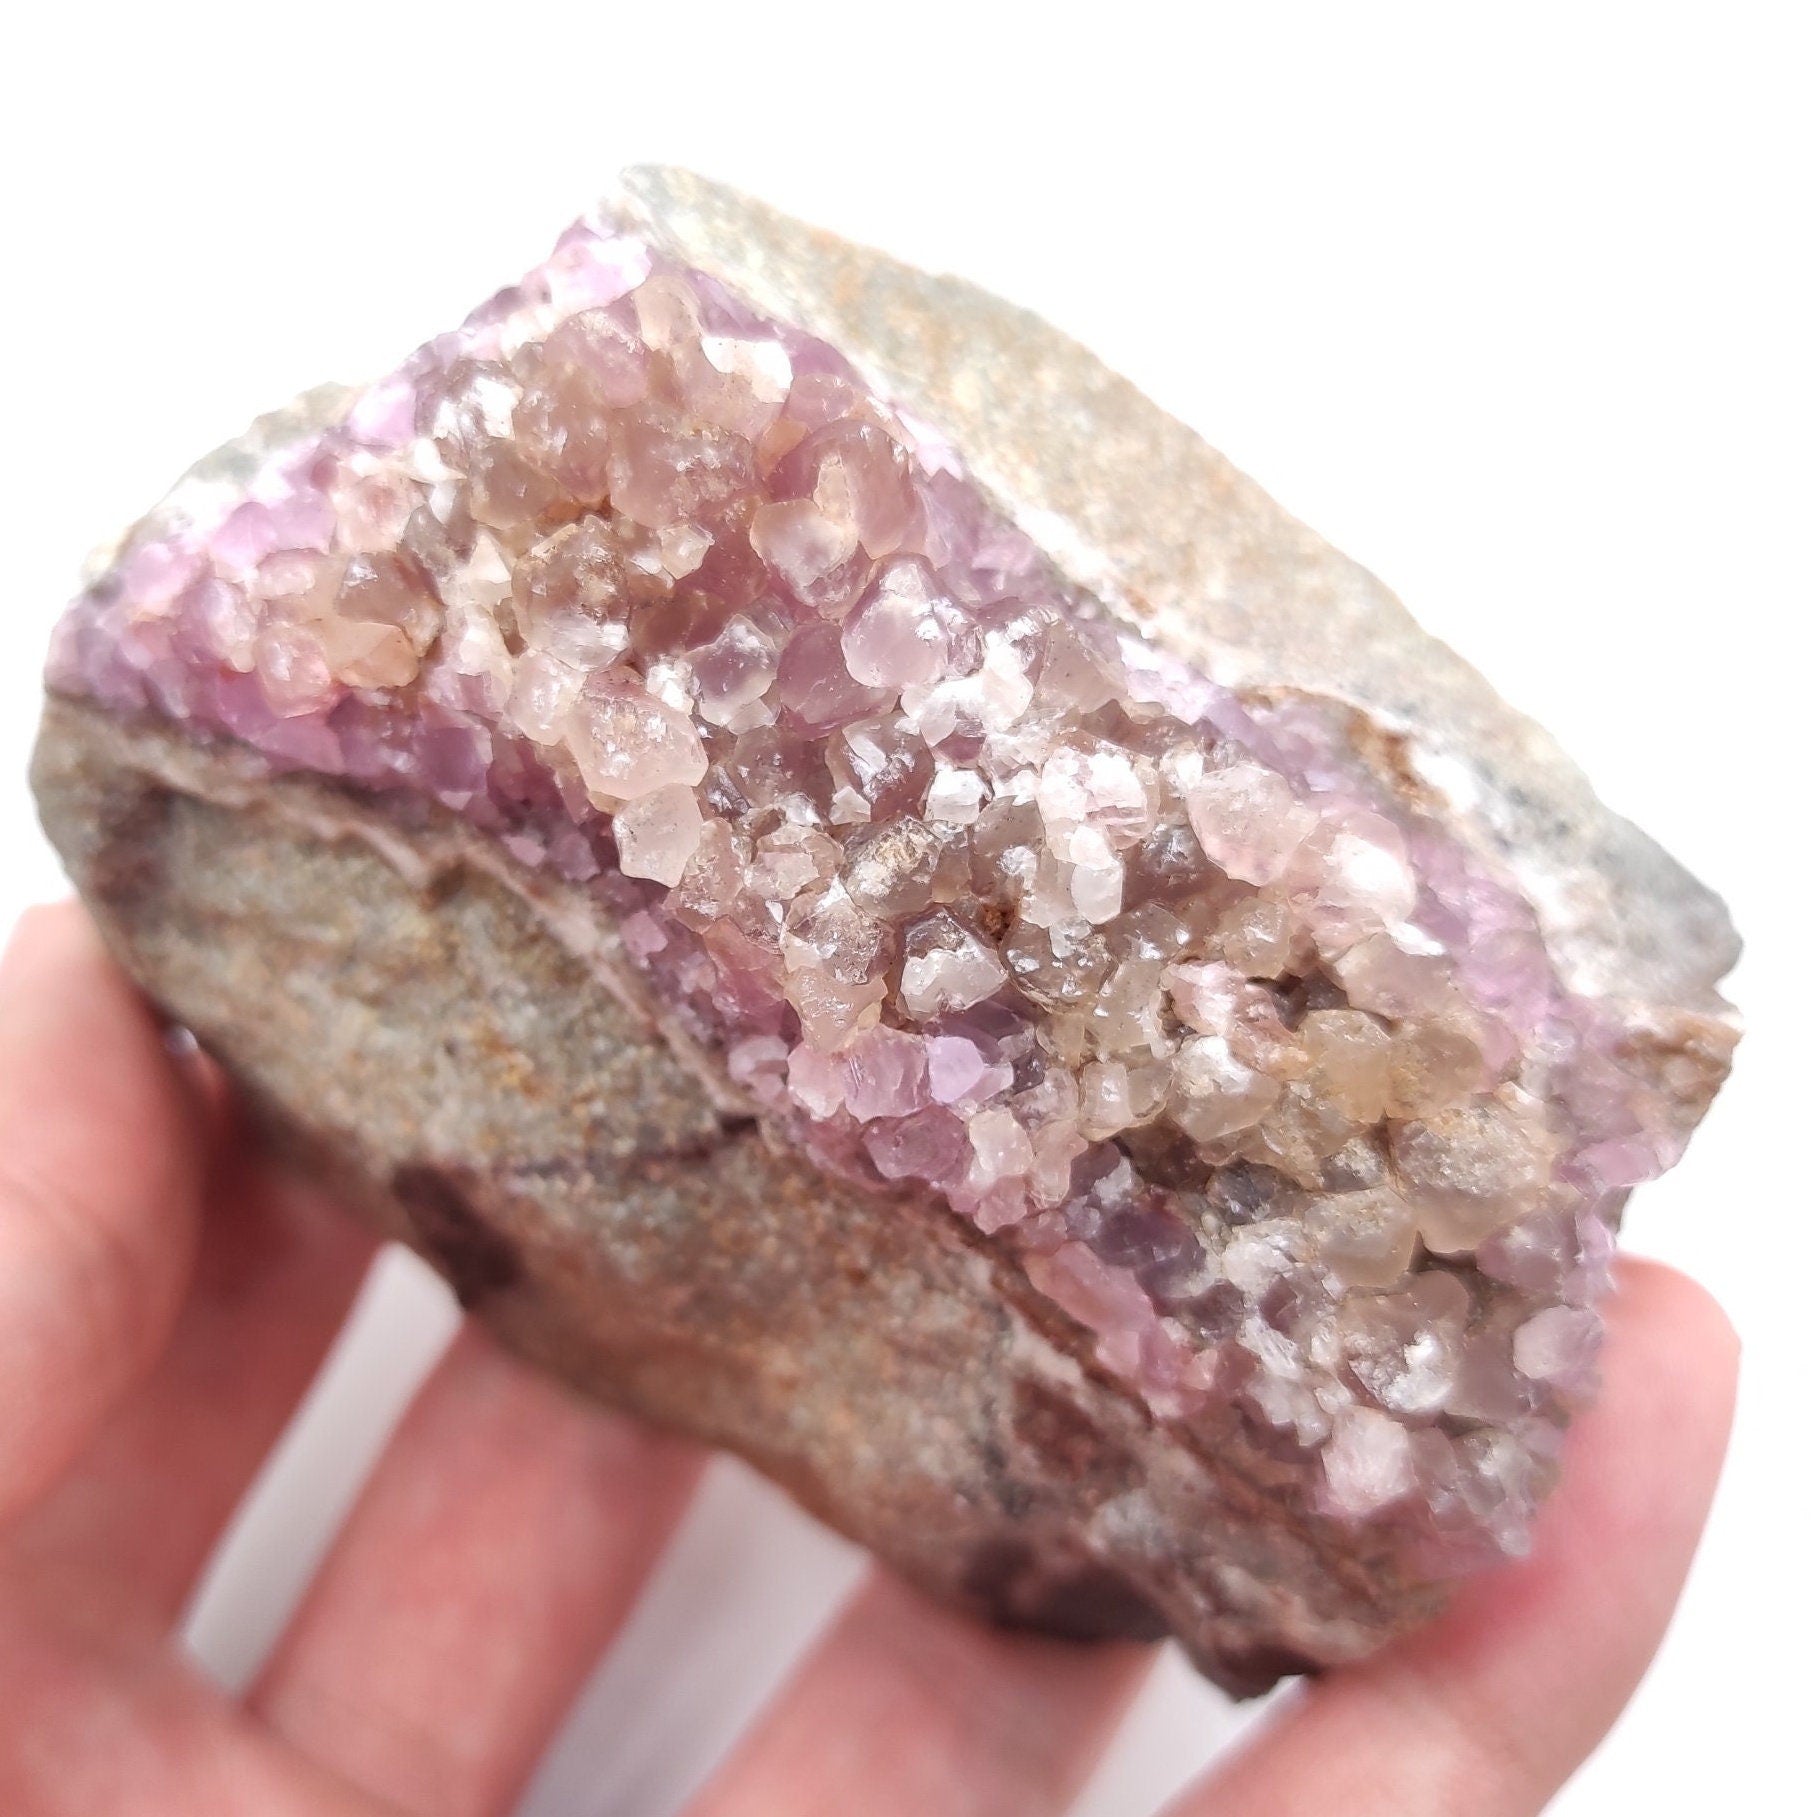 443g Cobalto Calcite in Matrix - Pink Cobalt Calcite from Bou Azzer, Morocco - Salrose Crystal - Cobaltocalcite Mineral Specimen